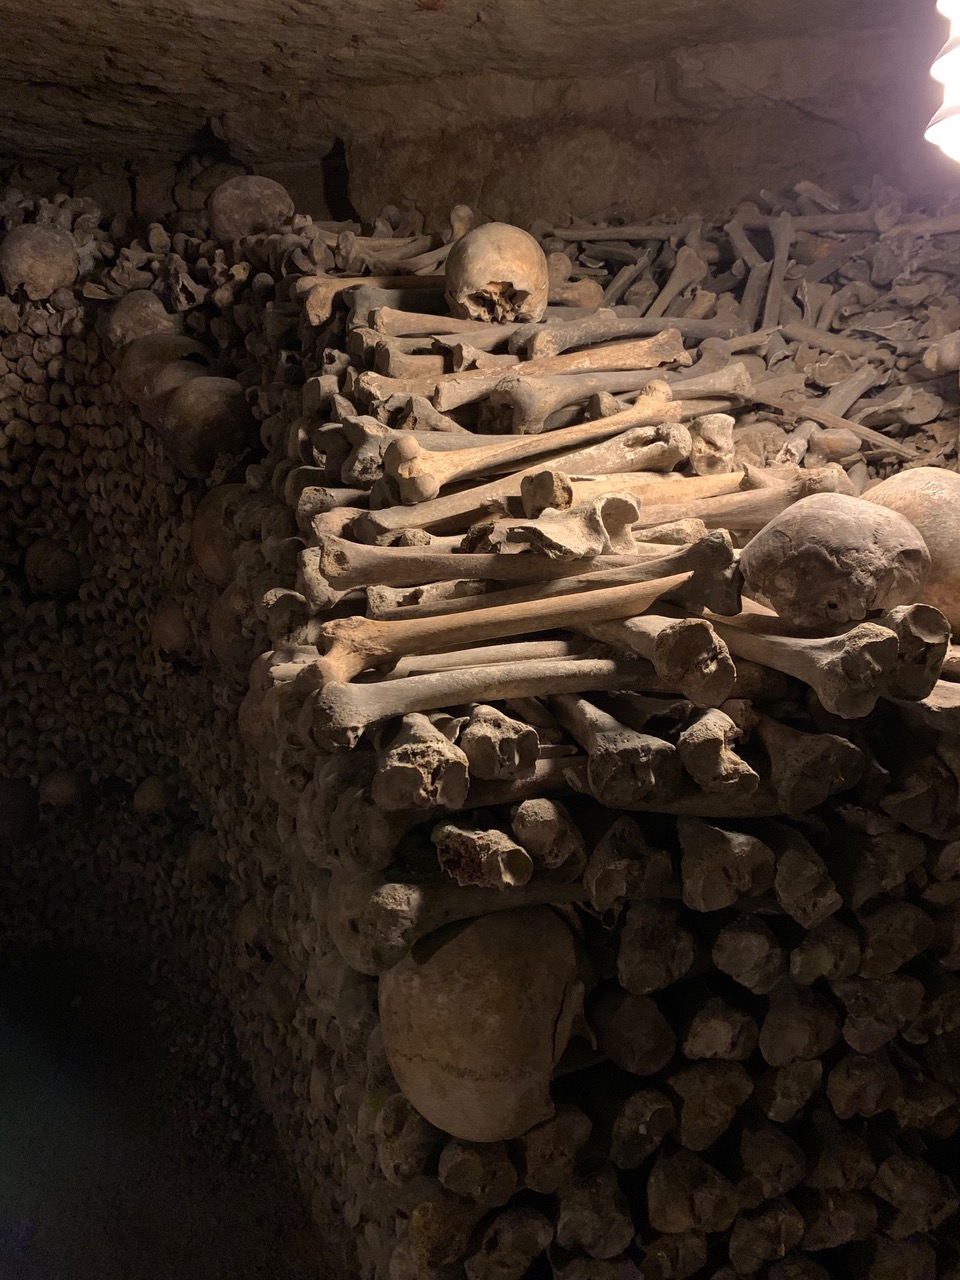 Pile of leg bones and skulls